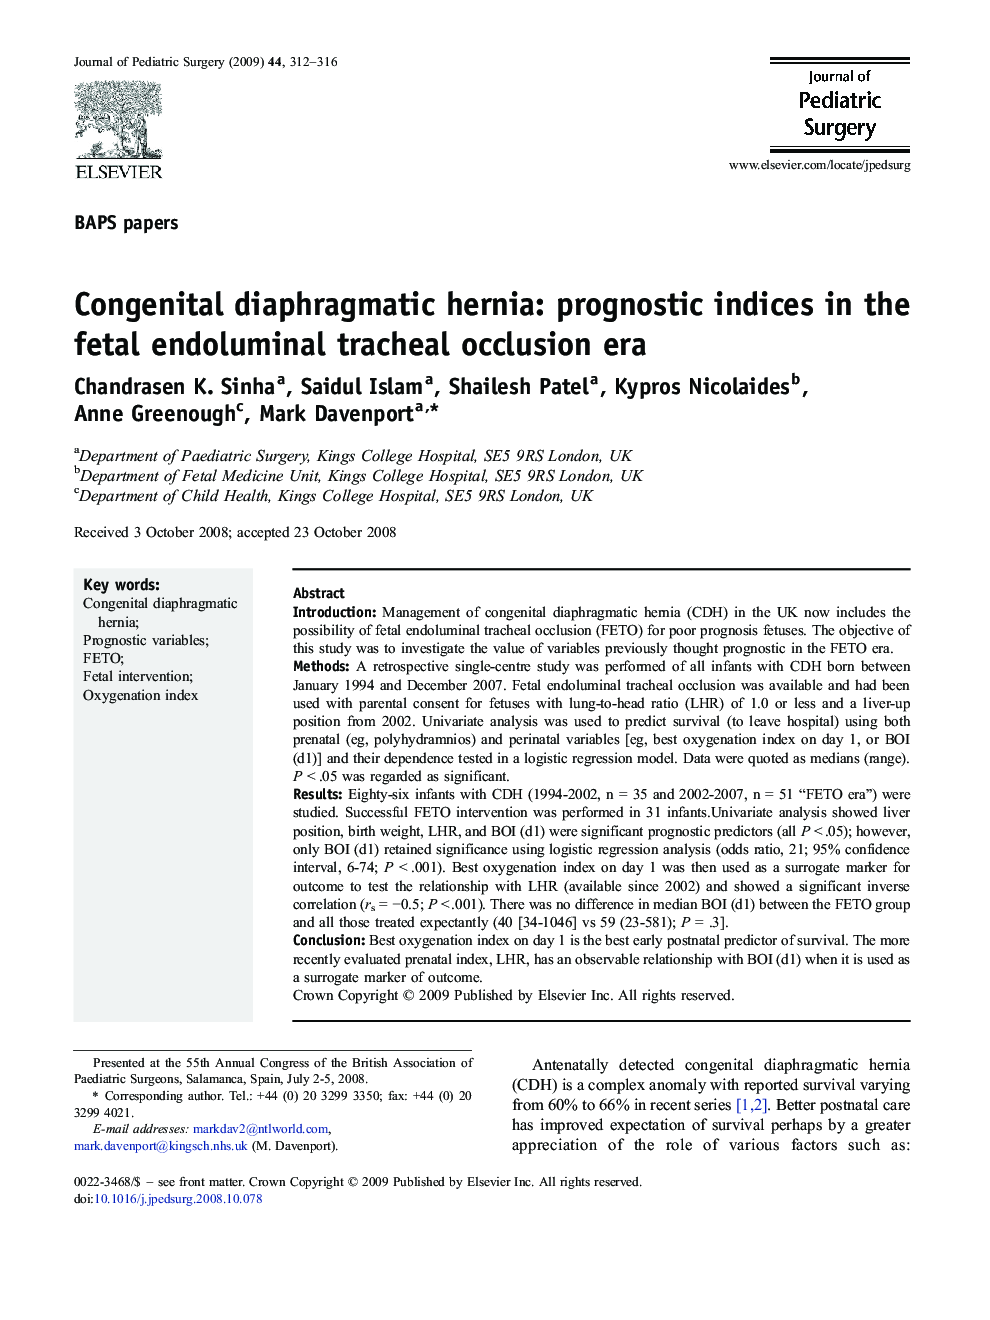 Congenital diaphragmatic hernia: prognostic indices in the fetal endoluminal tracheal occlusion era 